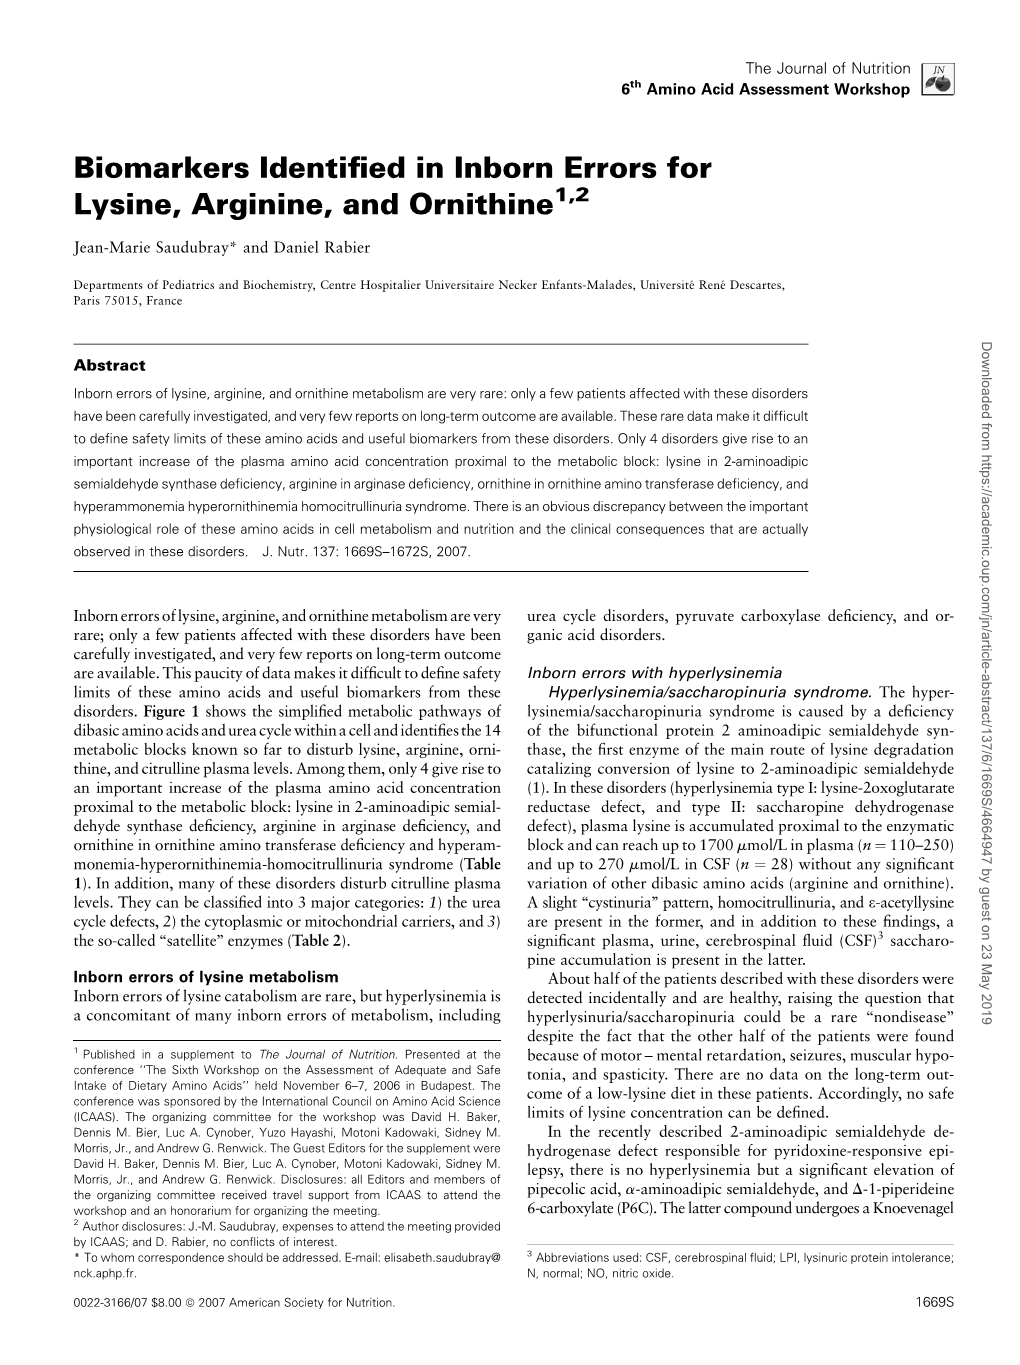 Biomarkers Identified in Inborn Errors for Lysine, Arginine, and Ornithine